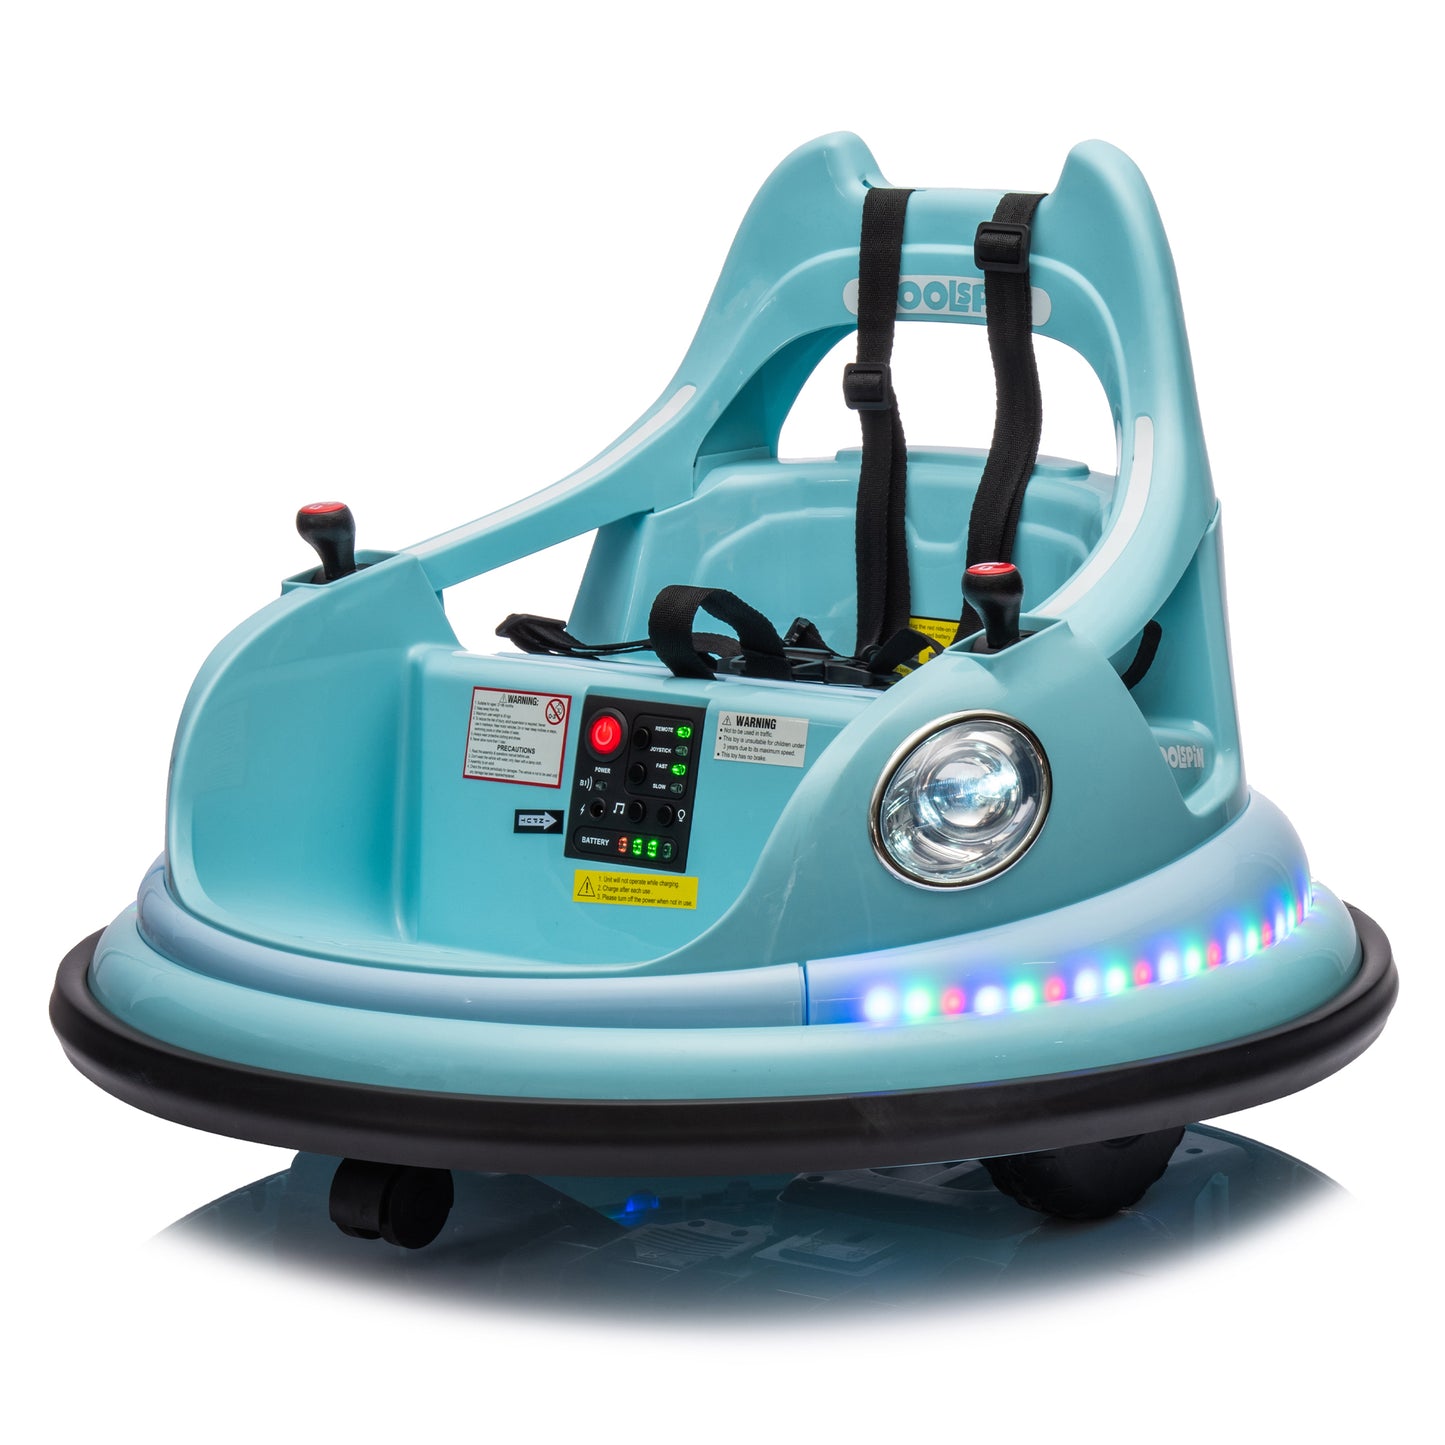 Remote Control Bumper car for kids - Ukerr Home